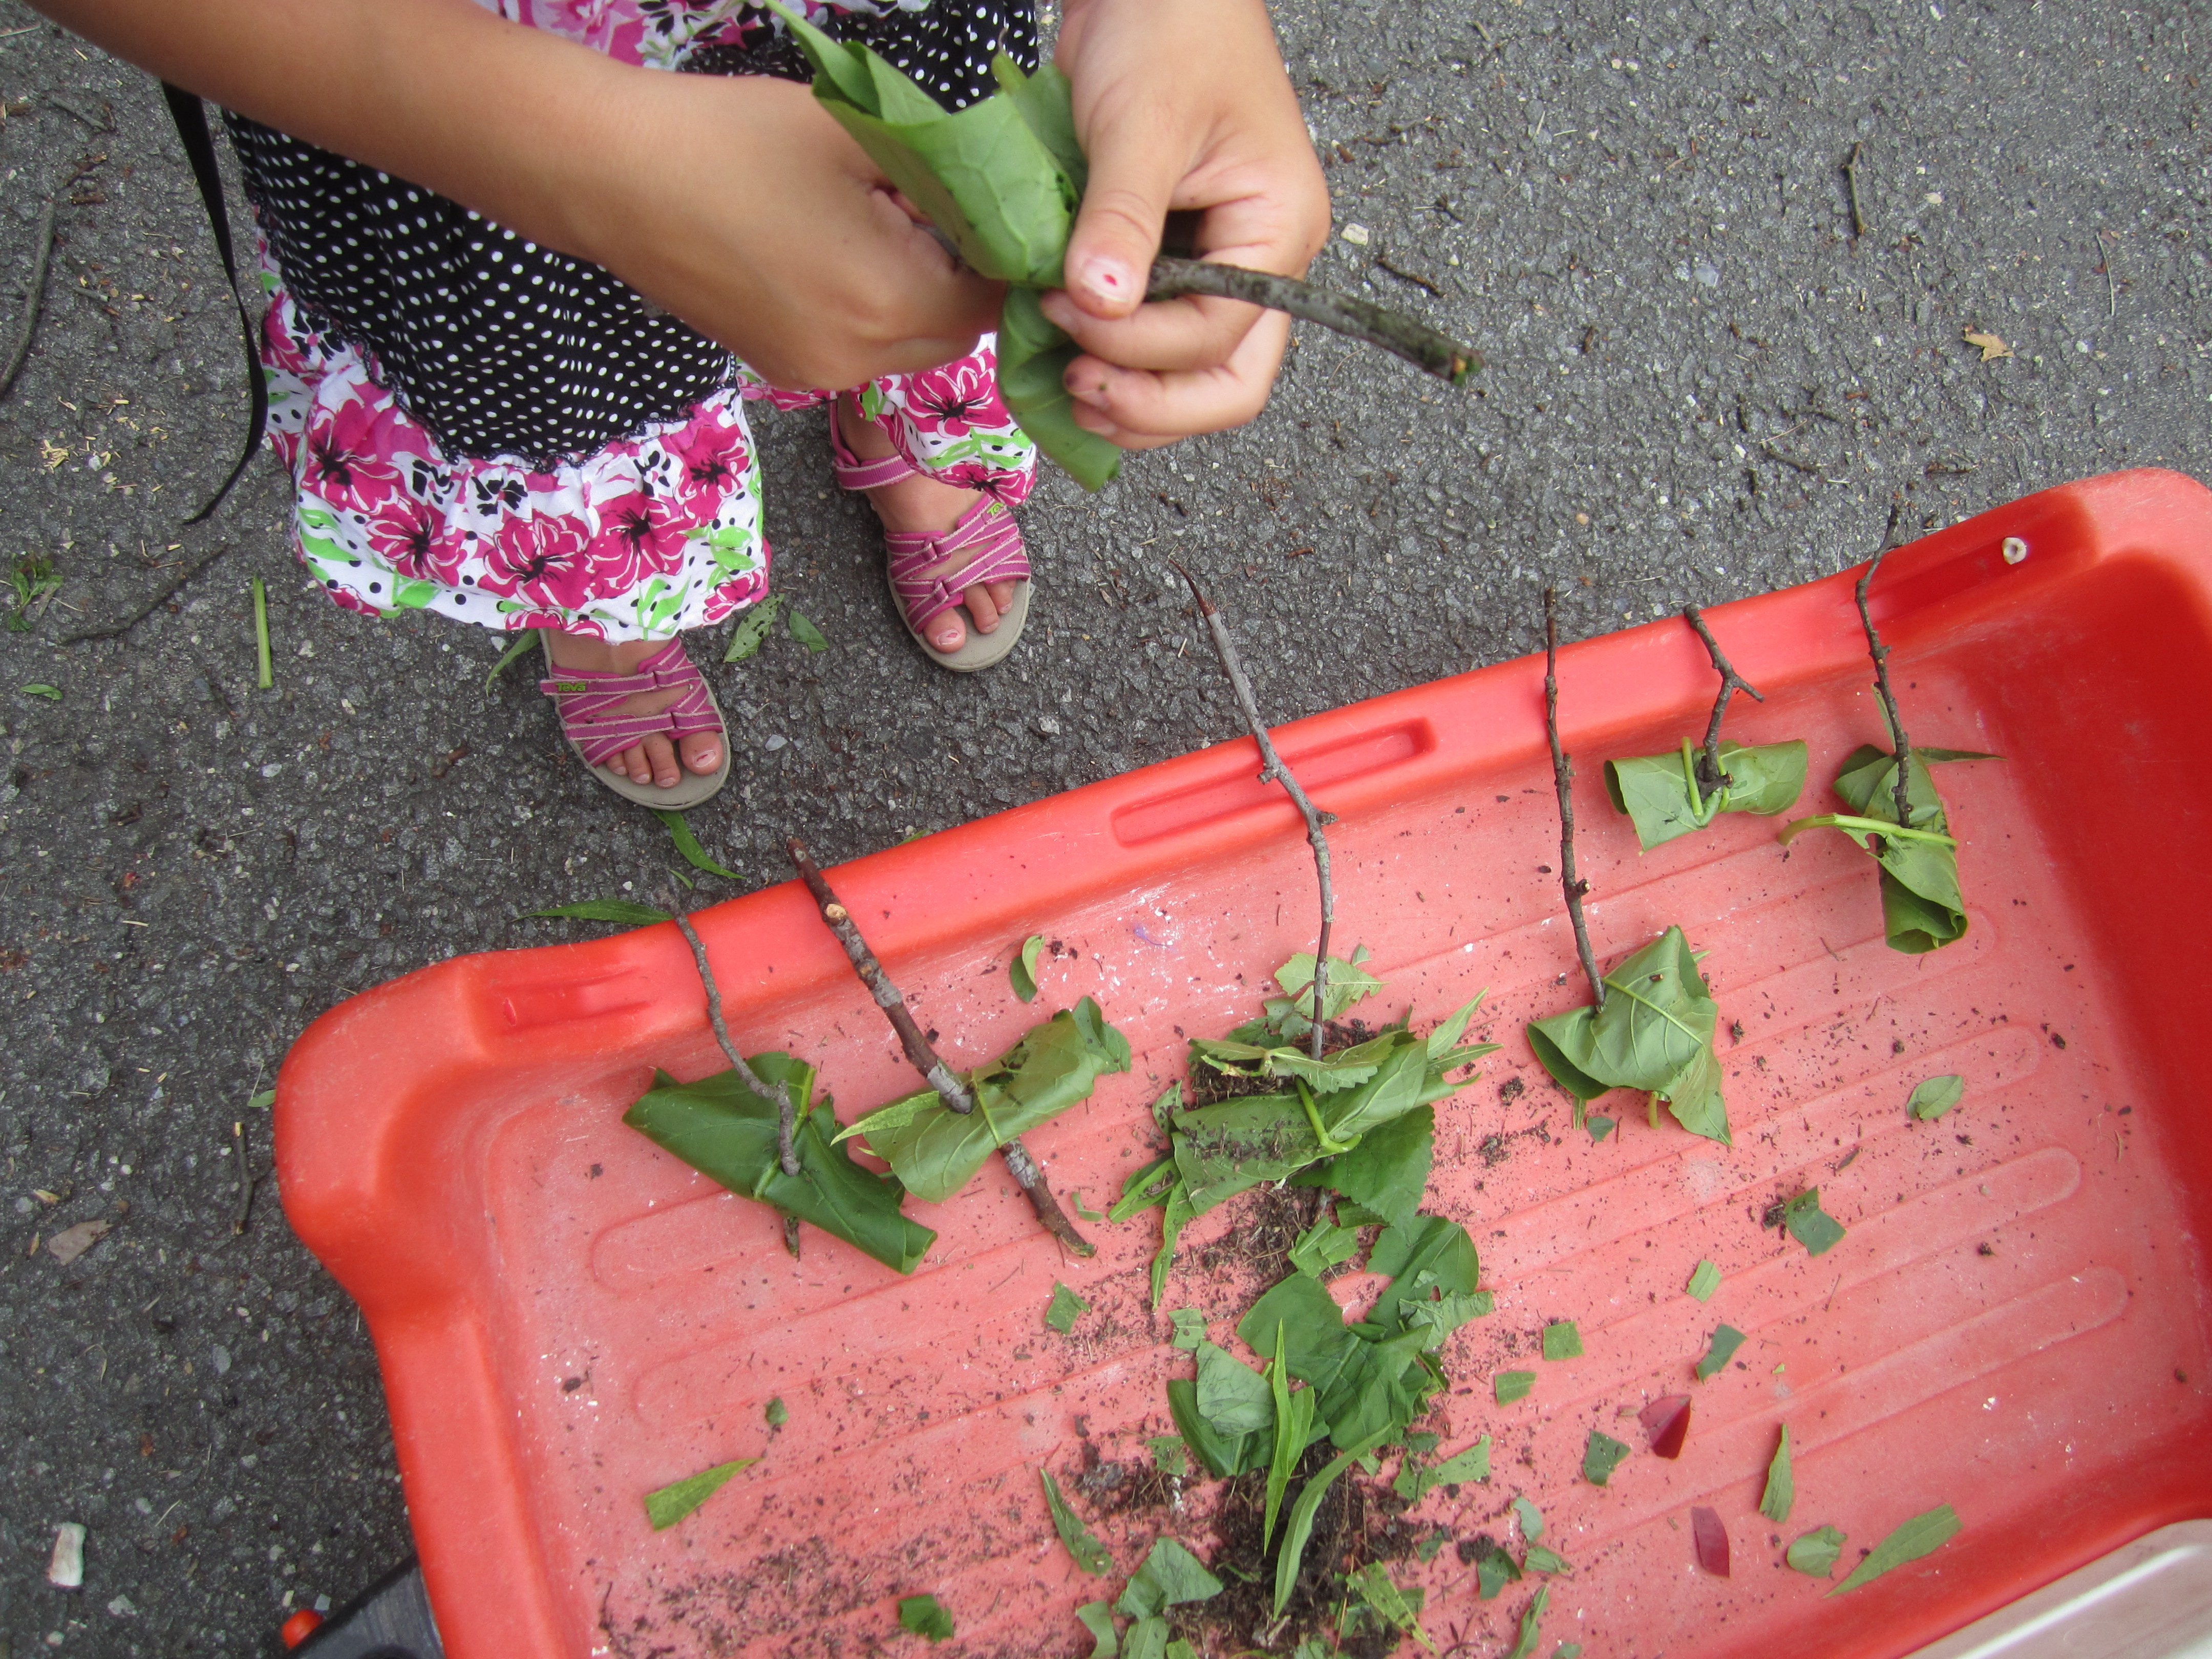 Children arrange play "food" made of leaves.